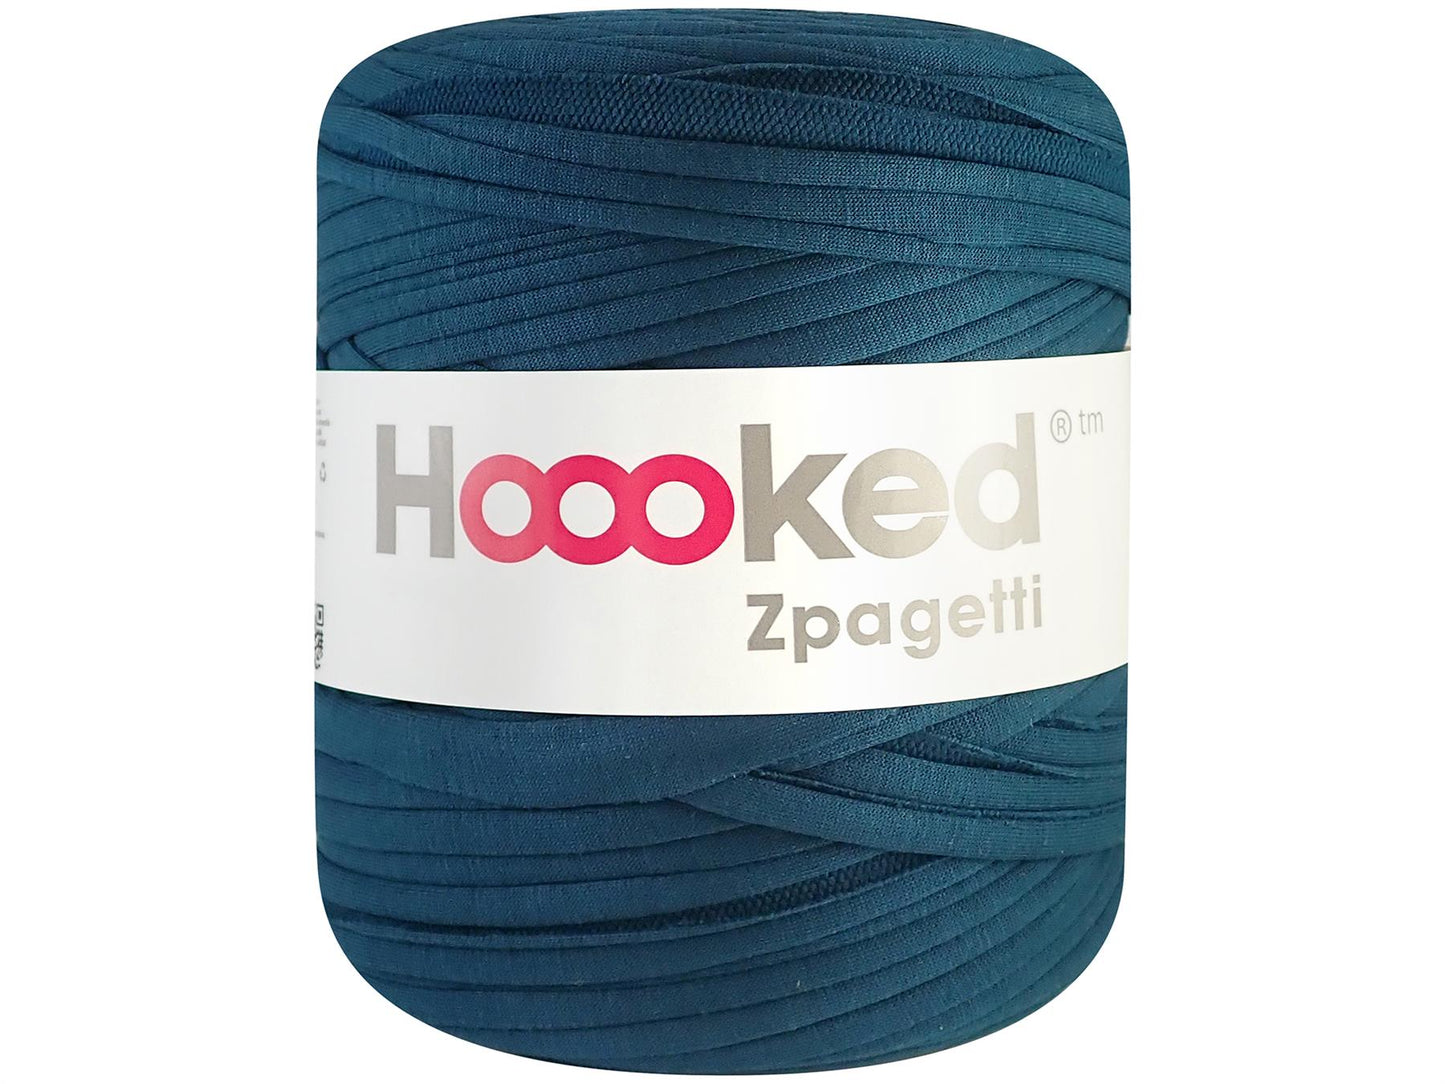 Hoooked Zpagetti Dark Teal Green Cotton T-Shirt Yarn - 120M 700g